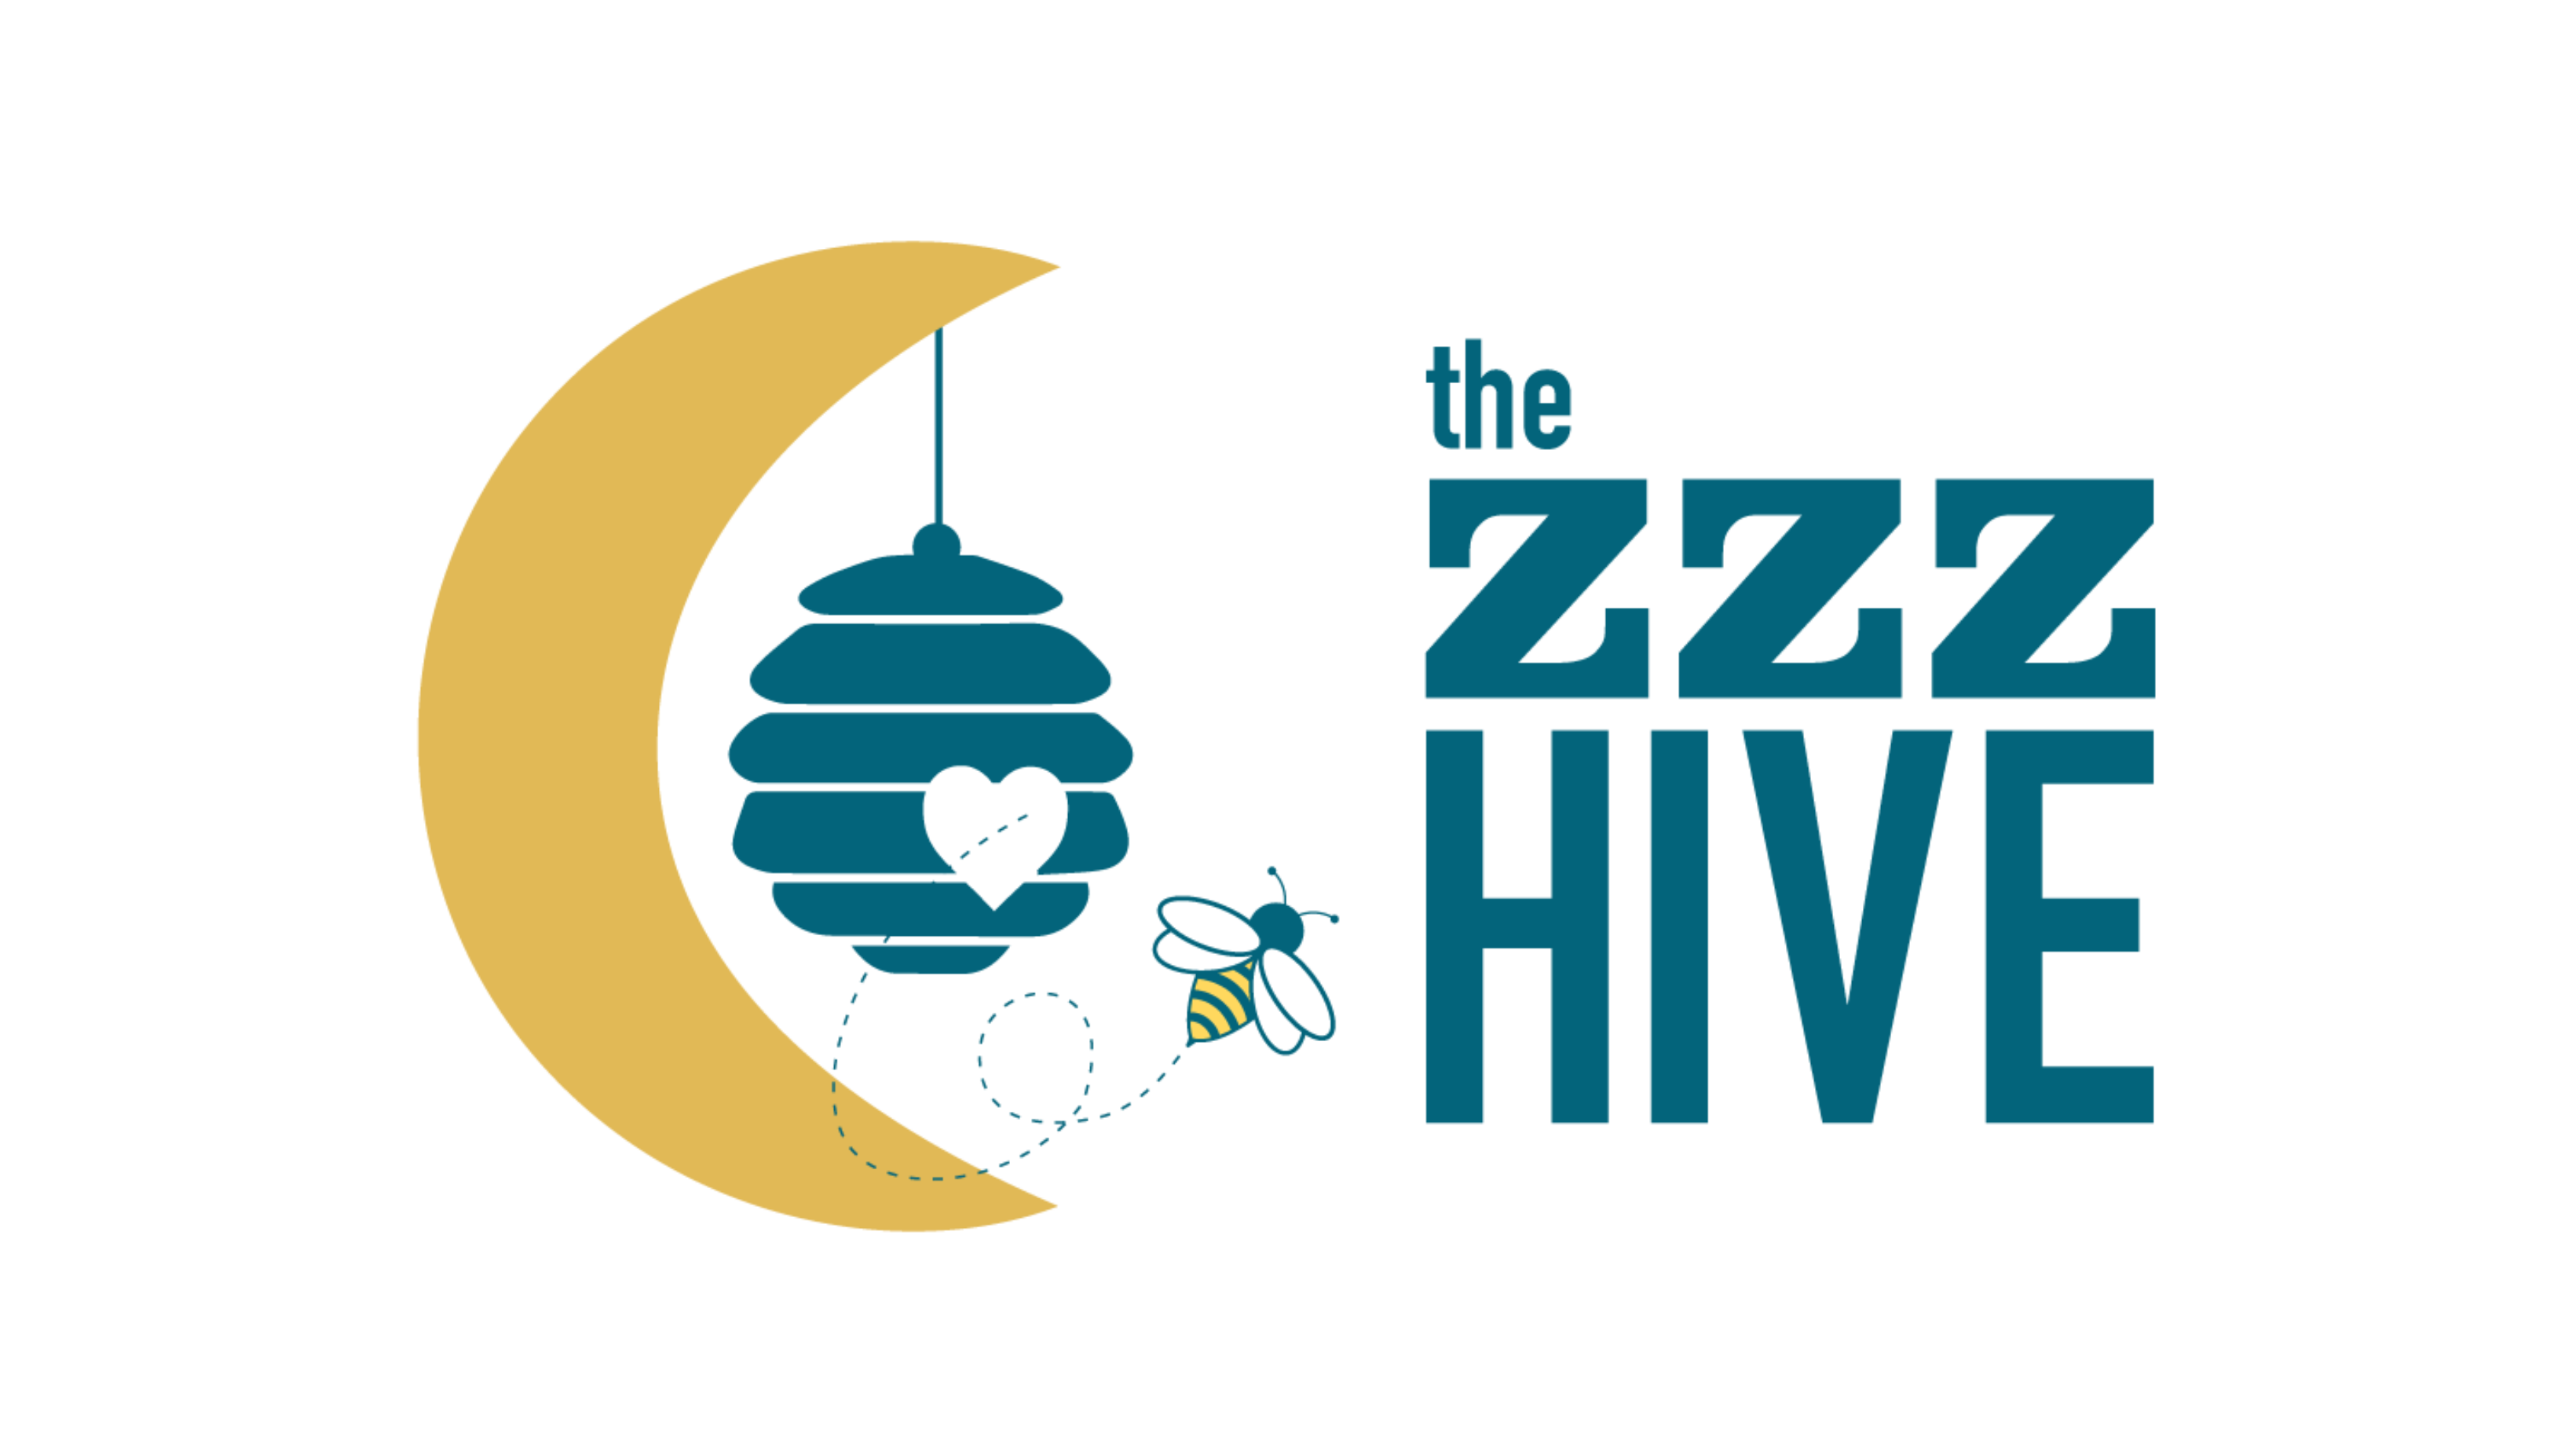 The Zzz Hive